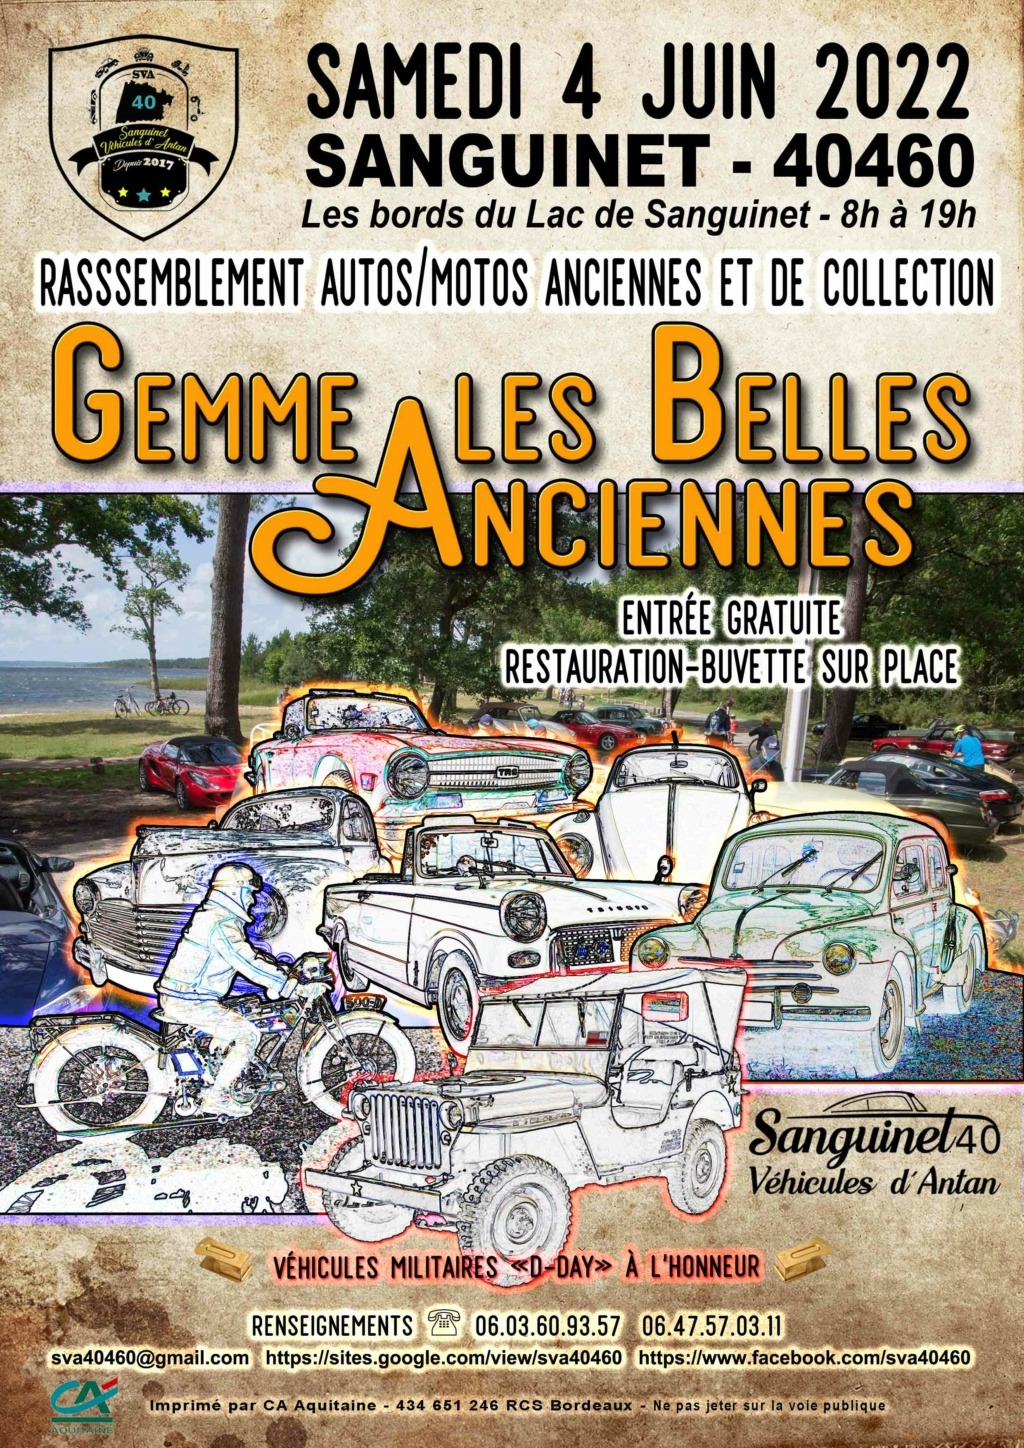 MANIFESTATION - Rassemblement Autos & Motos Anciennes - Samedi 4 Juin 2022 - Sanguinet (40460) 2022af12